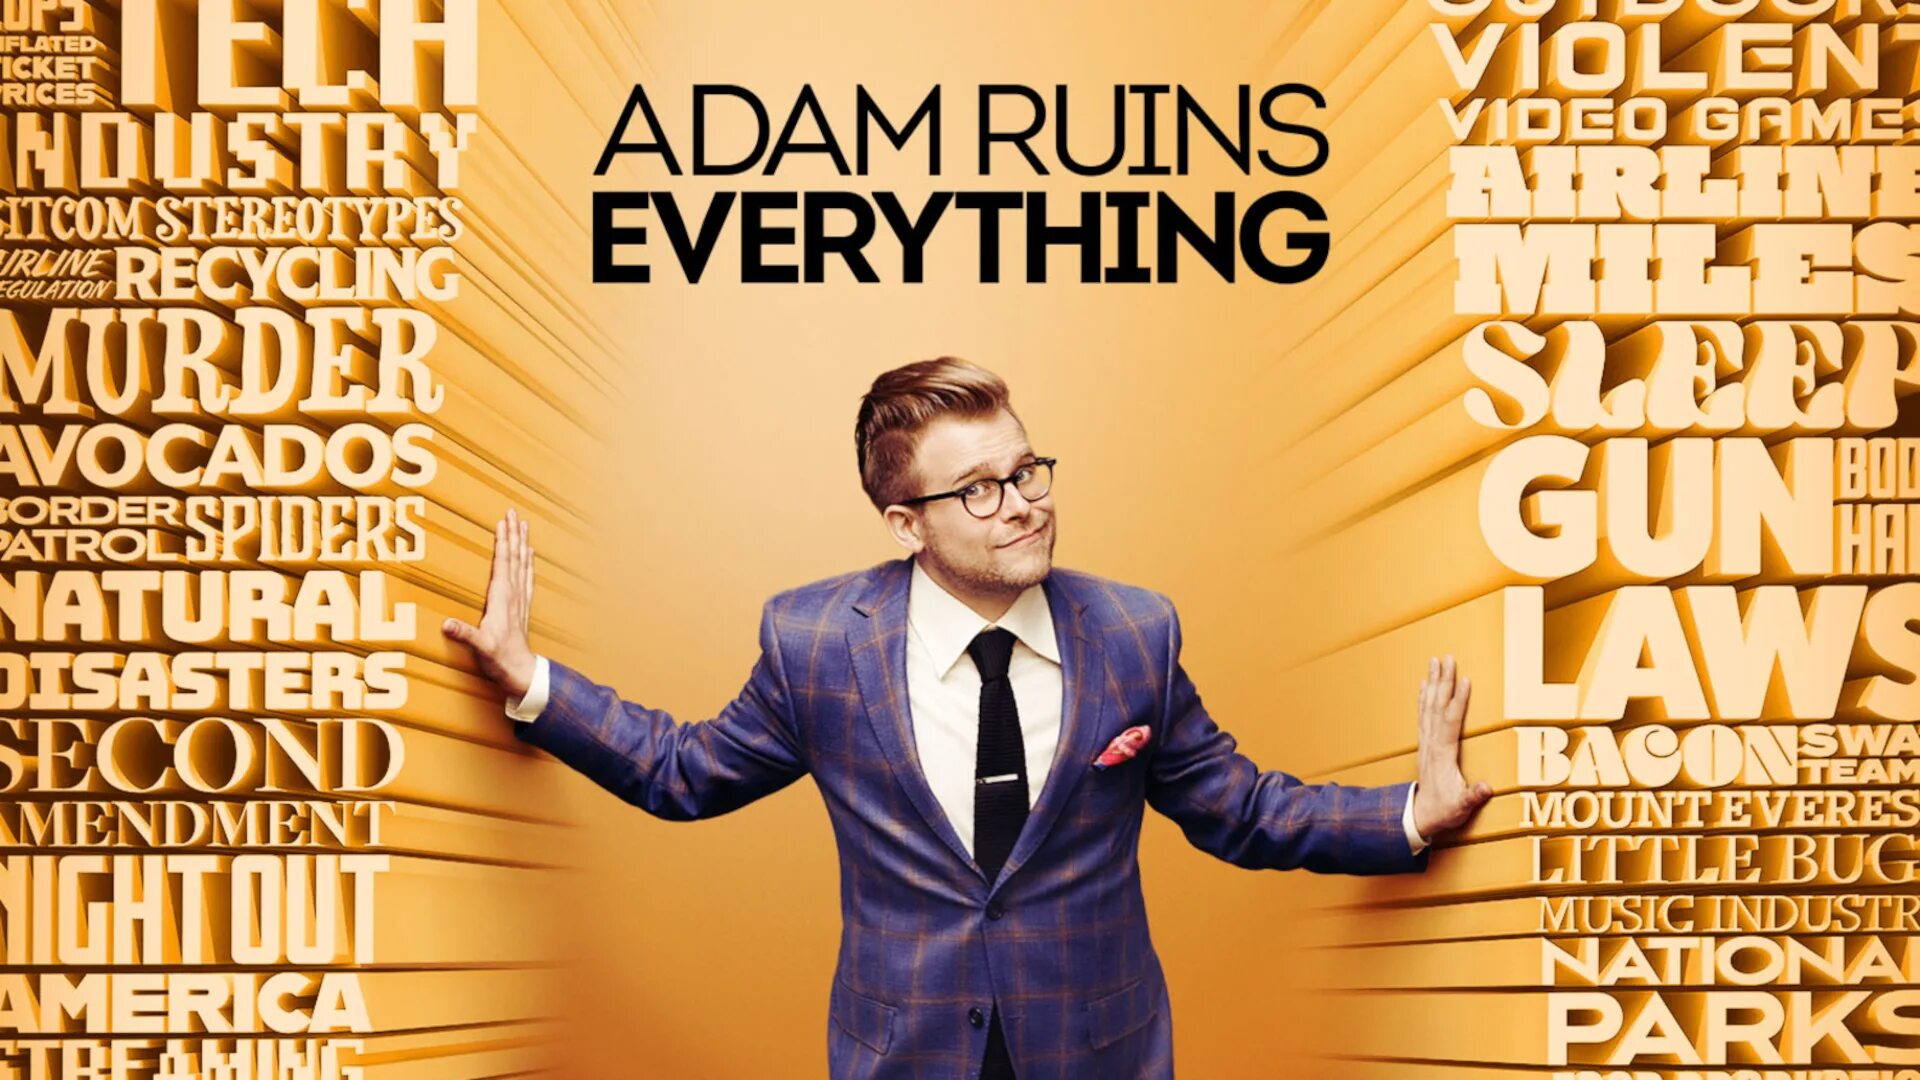 Adam Ruins everything. Adam Ruins everything демократические выборы. Everything's ruined